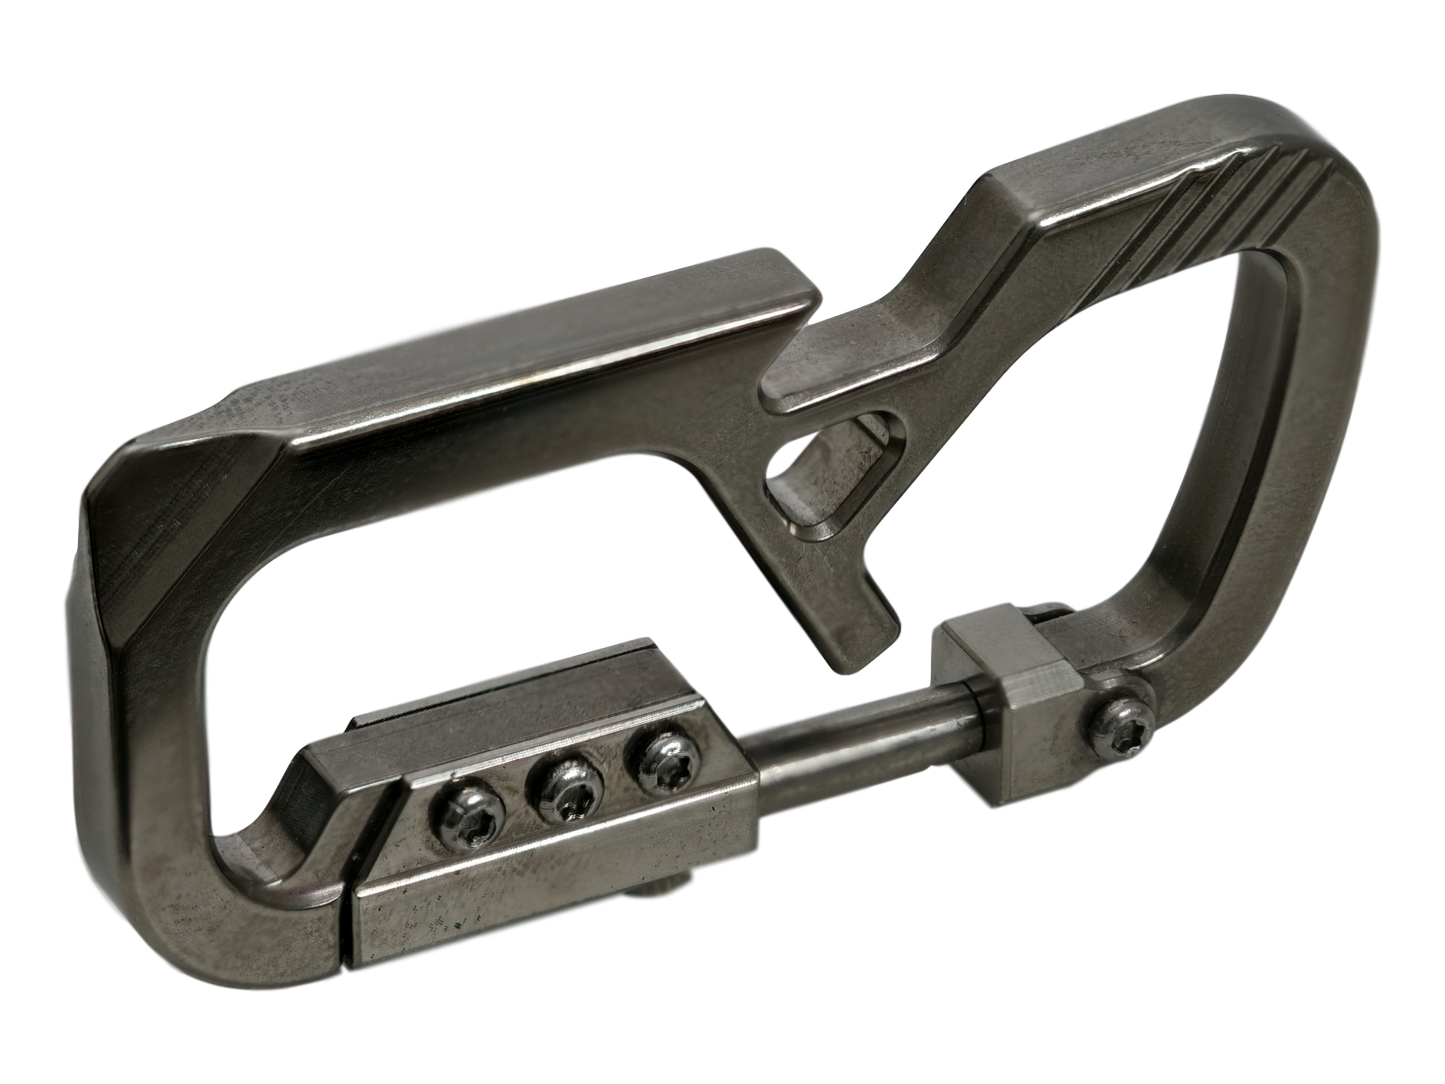 Valtcan Titanium Bolt Carabiner Key Chain Holder CyberCarabiner 24g